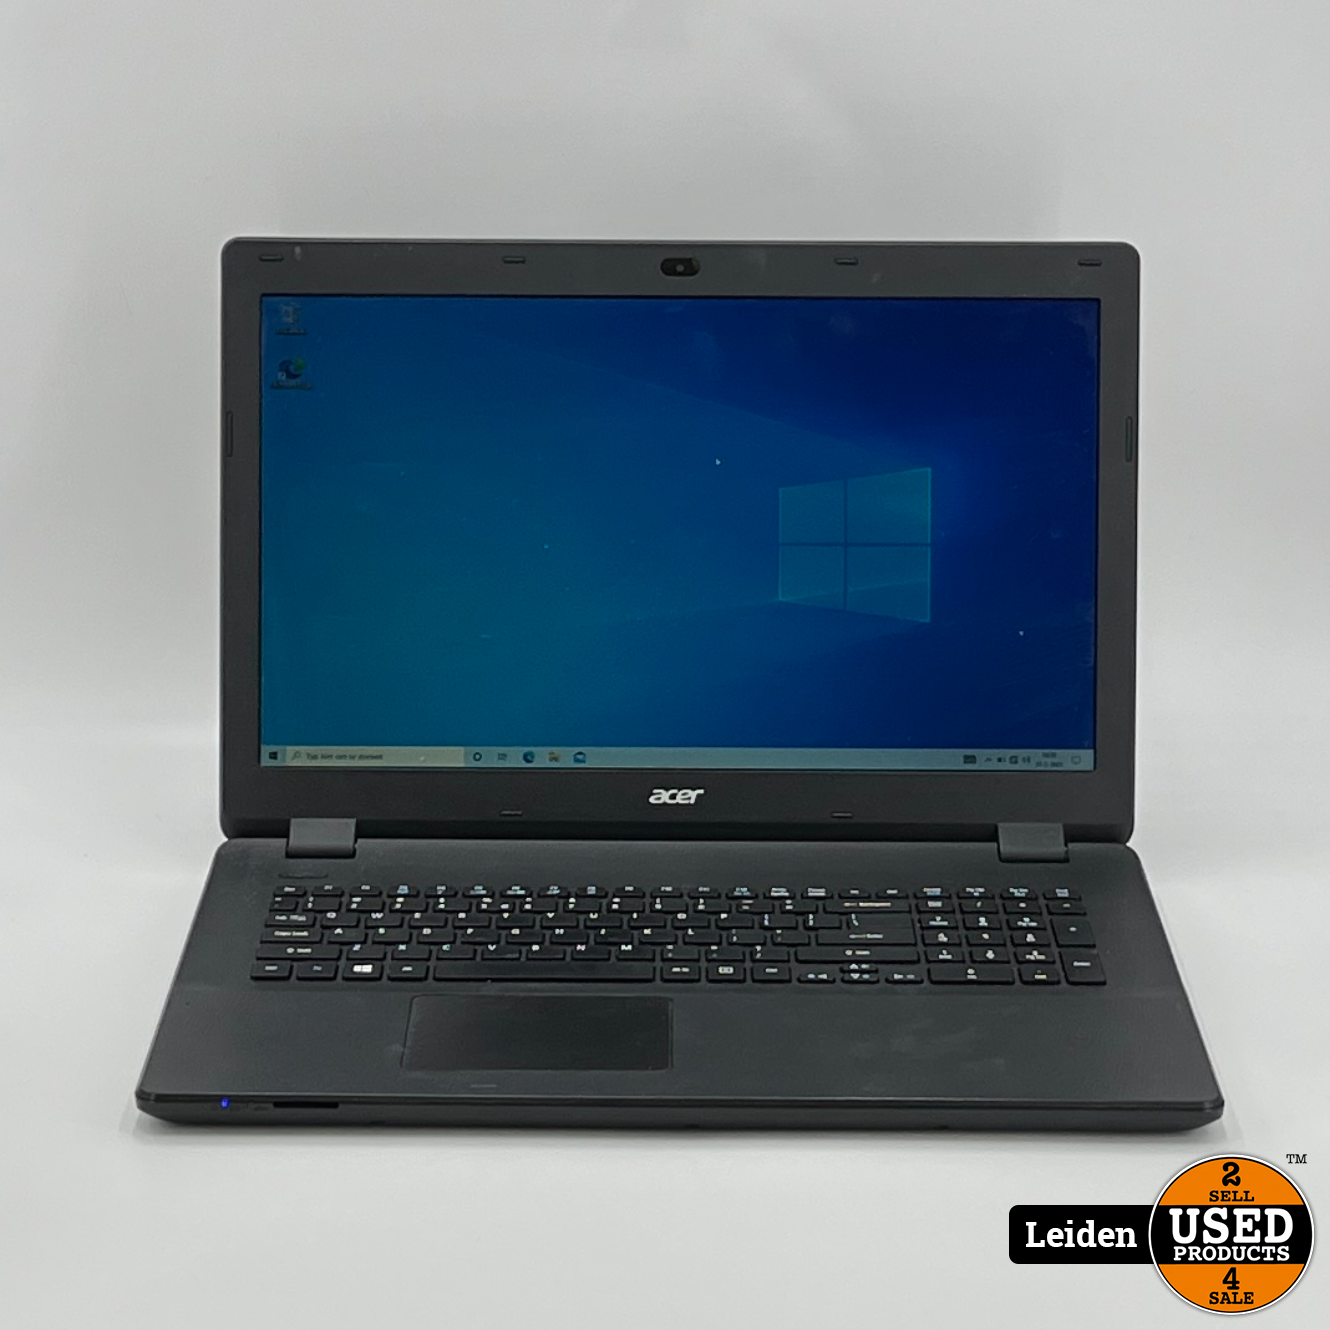 wonder kleurstof Trots Acer ES1-731 17-inch Laptop - Used Products Leiden